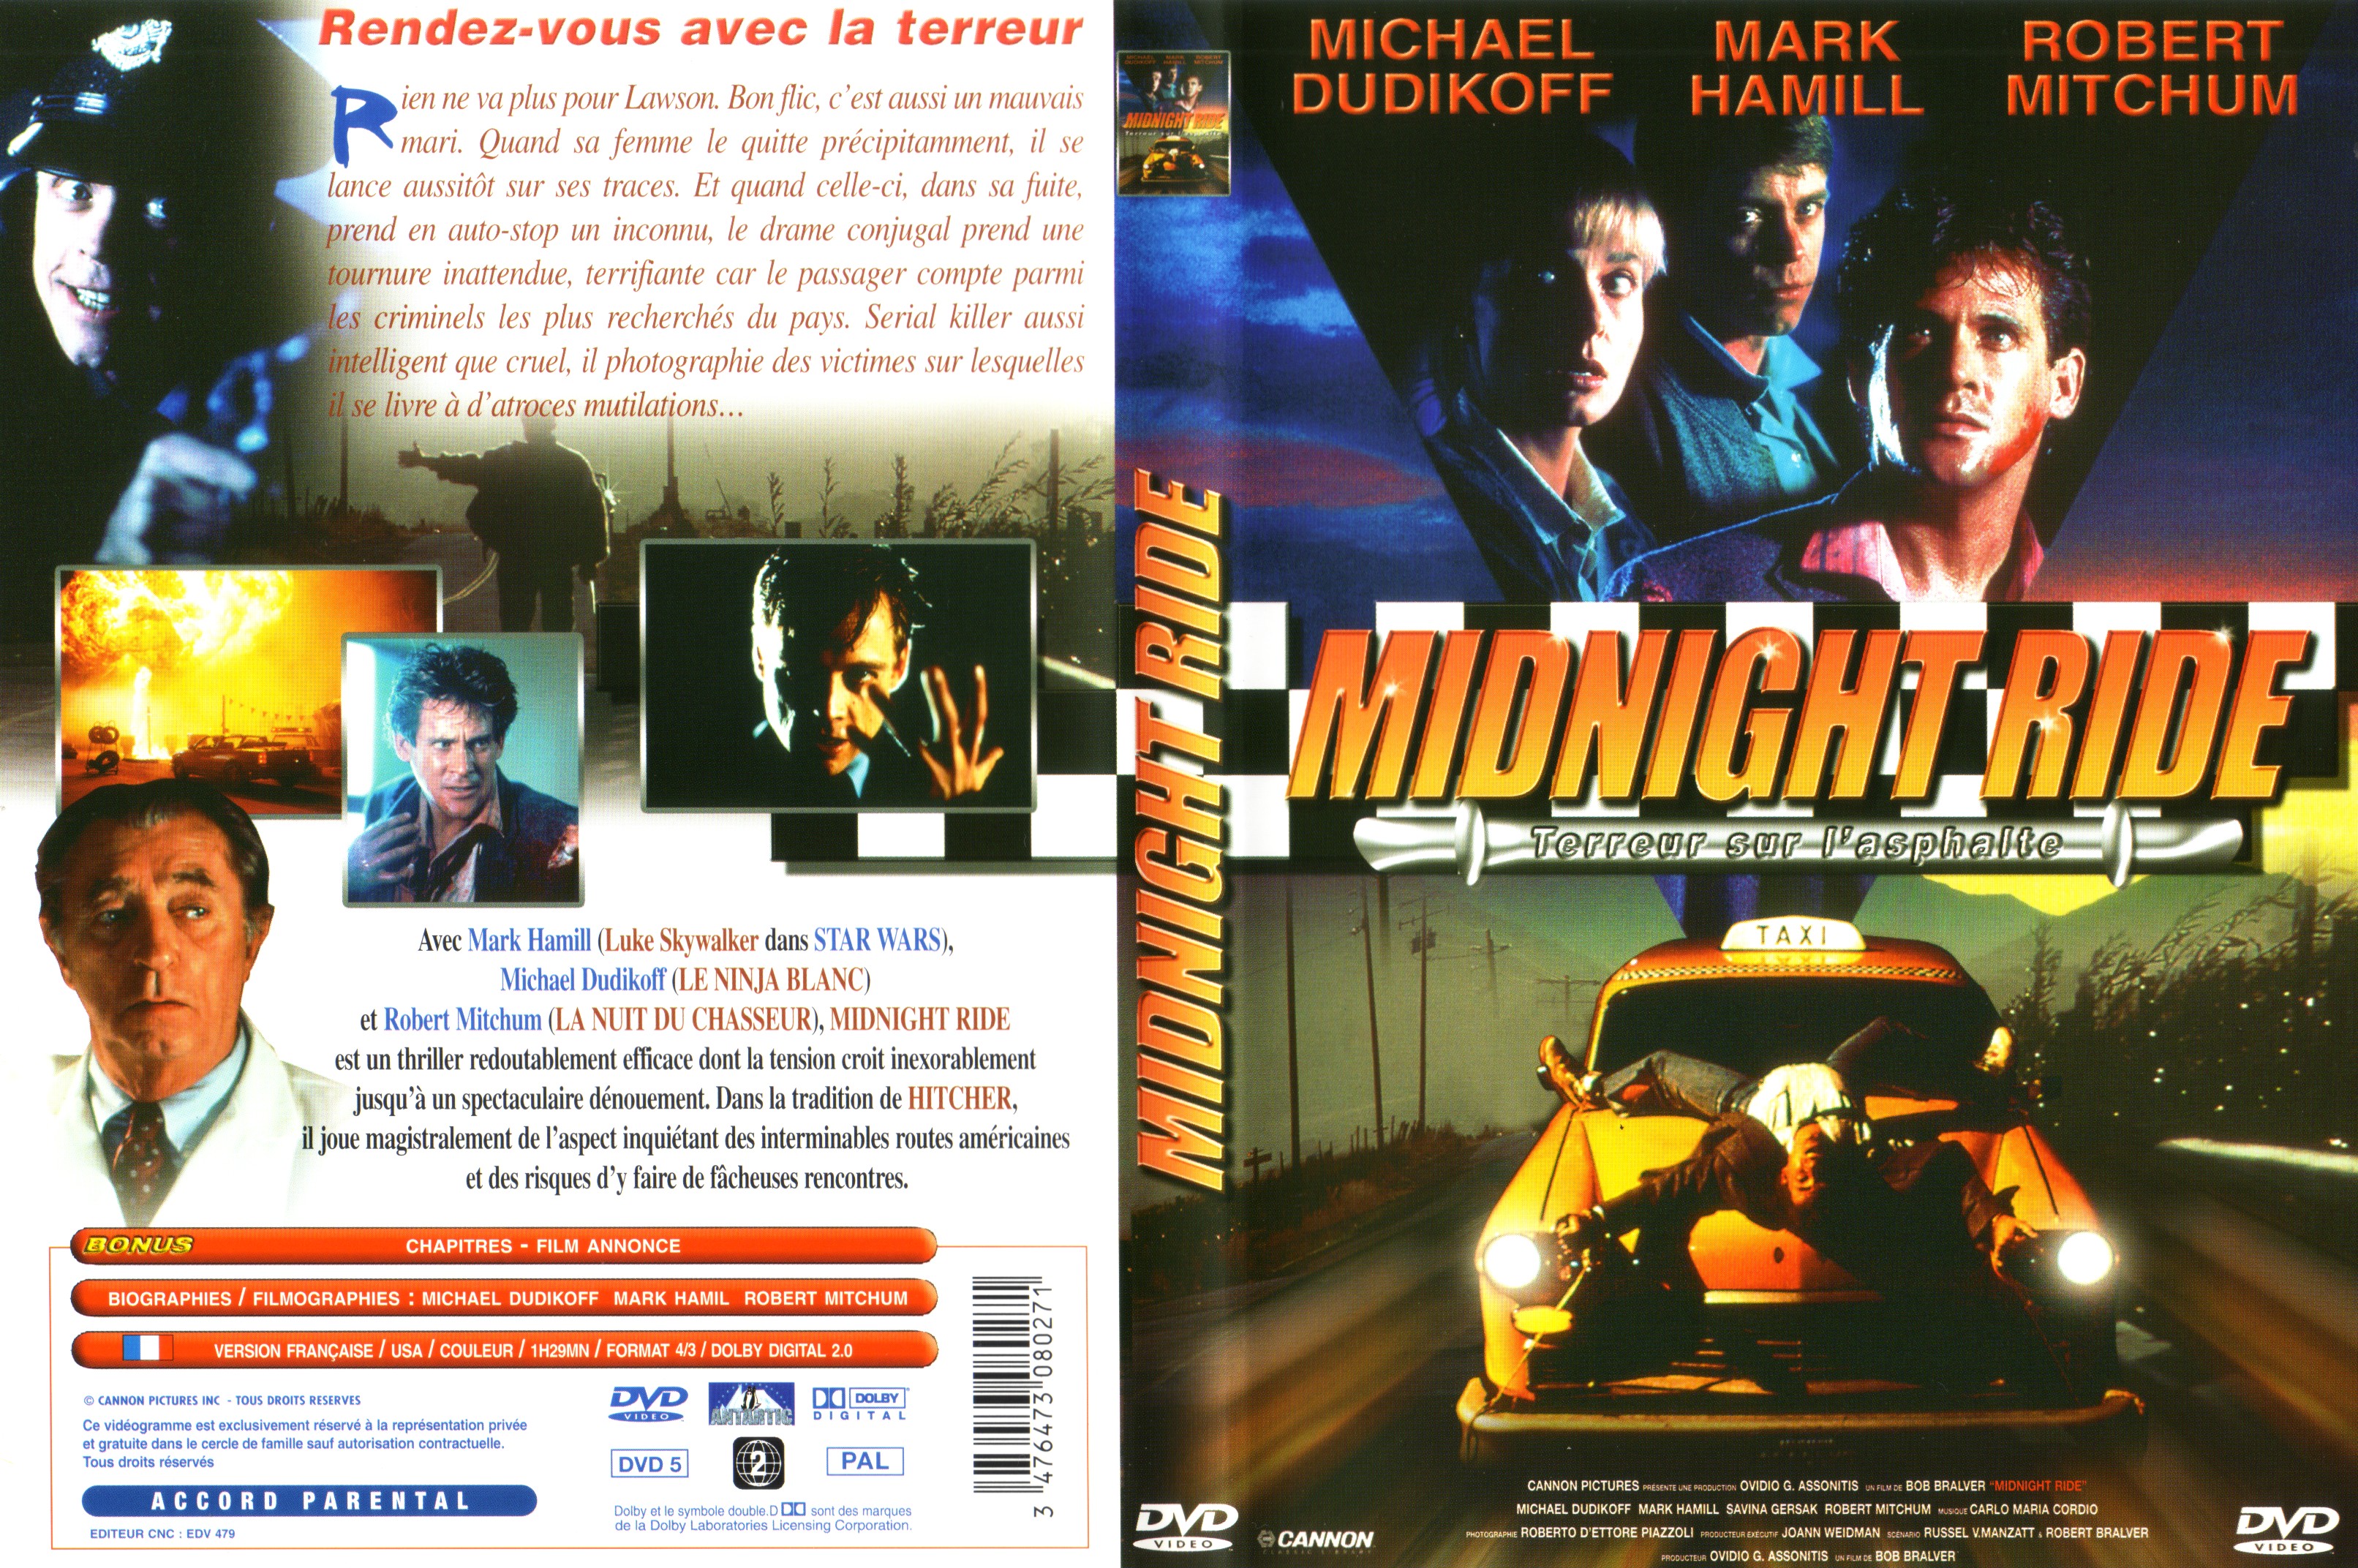 Jaquette DVD Midnight ride